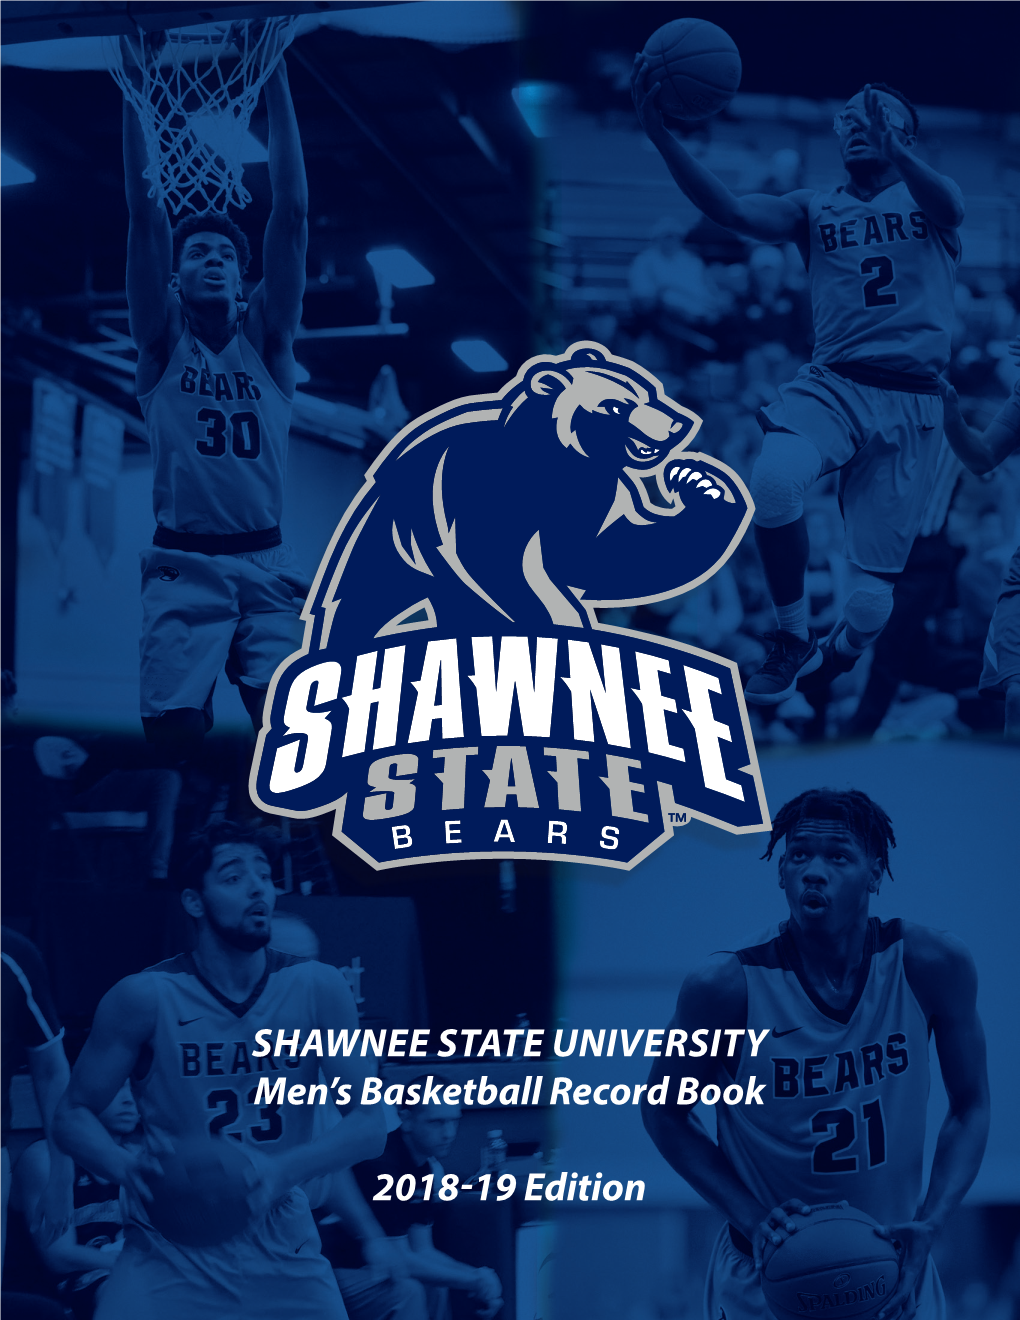 SHAWNEE STATE UNIVERSITY Men's Basketball Record Book 2018-19 Edition